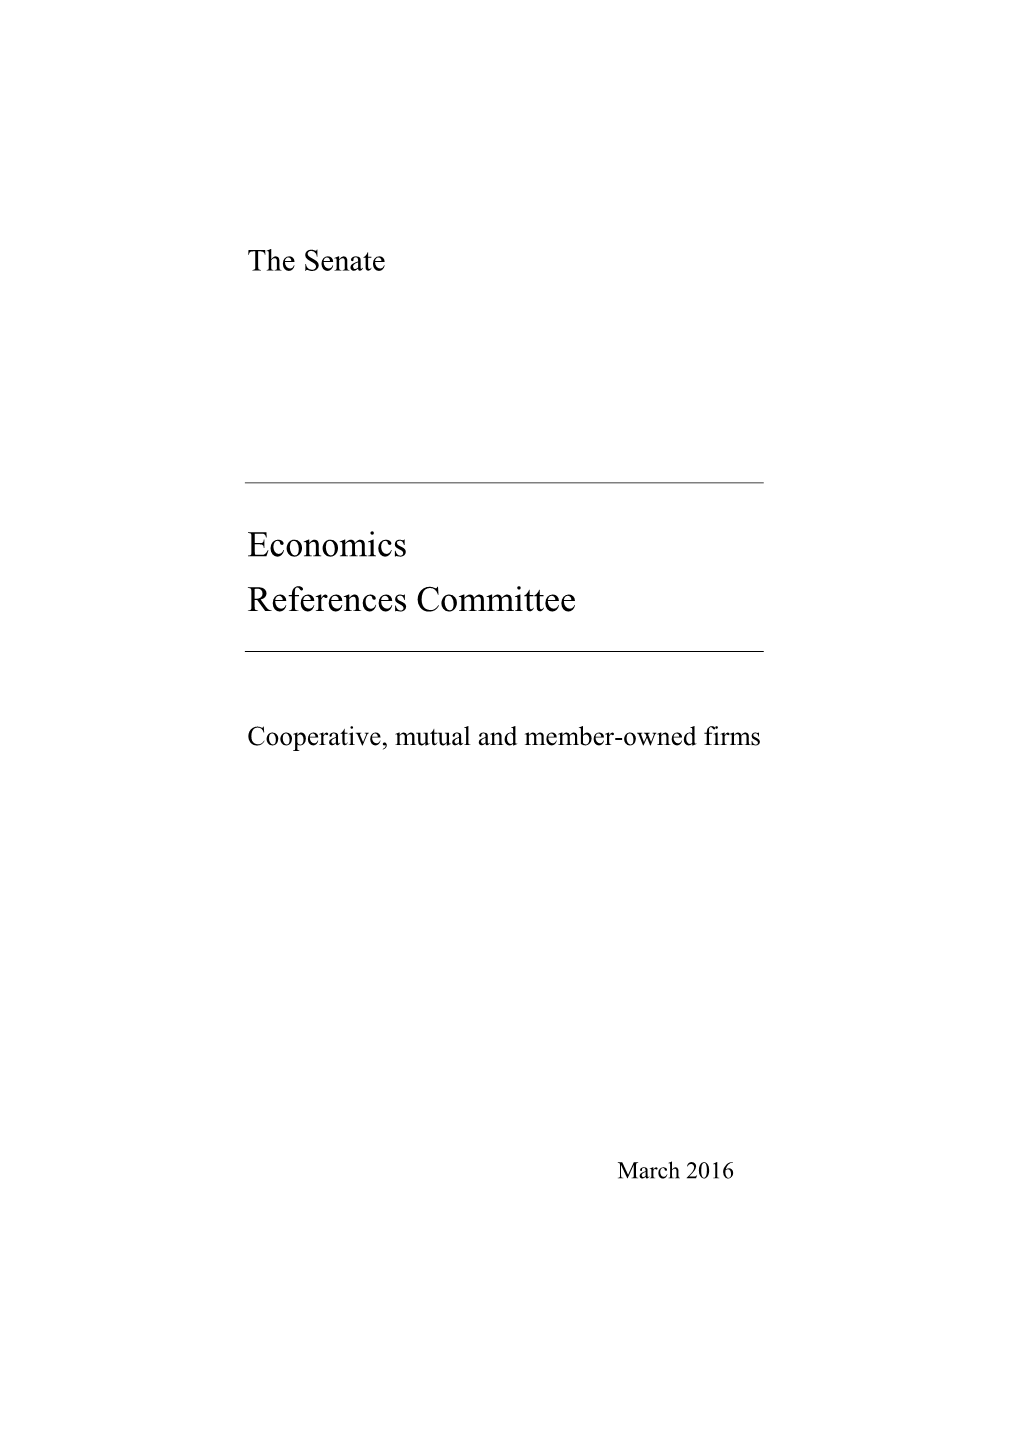 2016 Senate Economic References Committee Report Into Cooperative